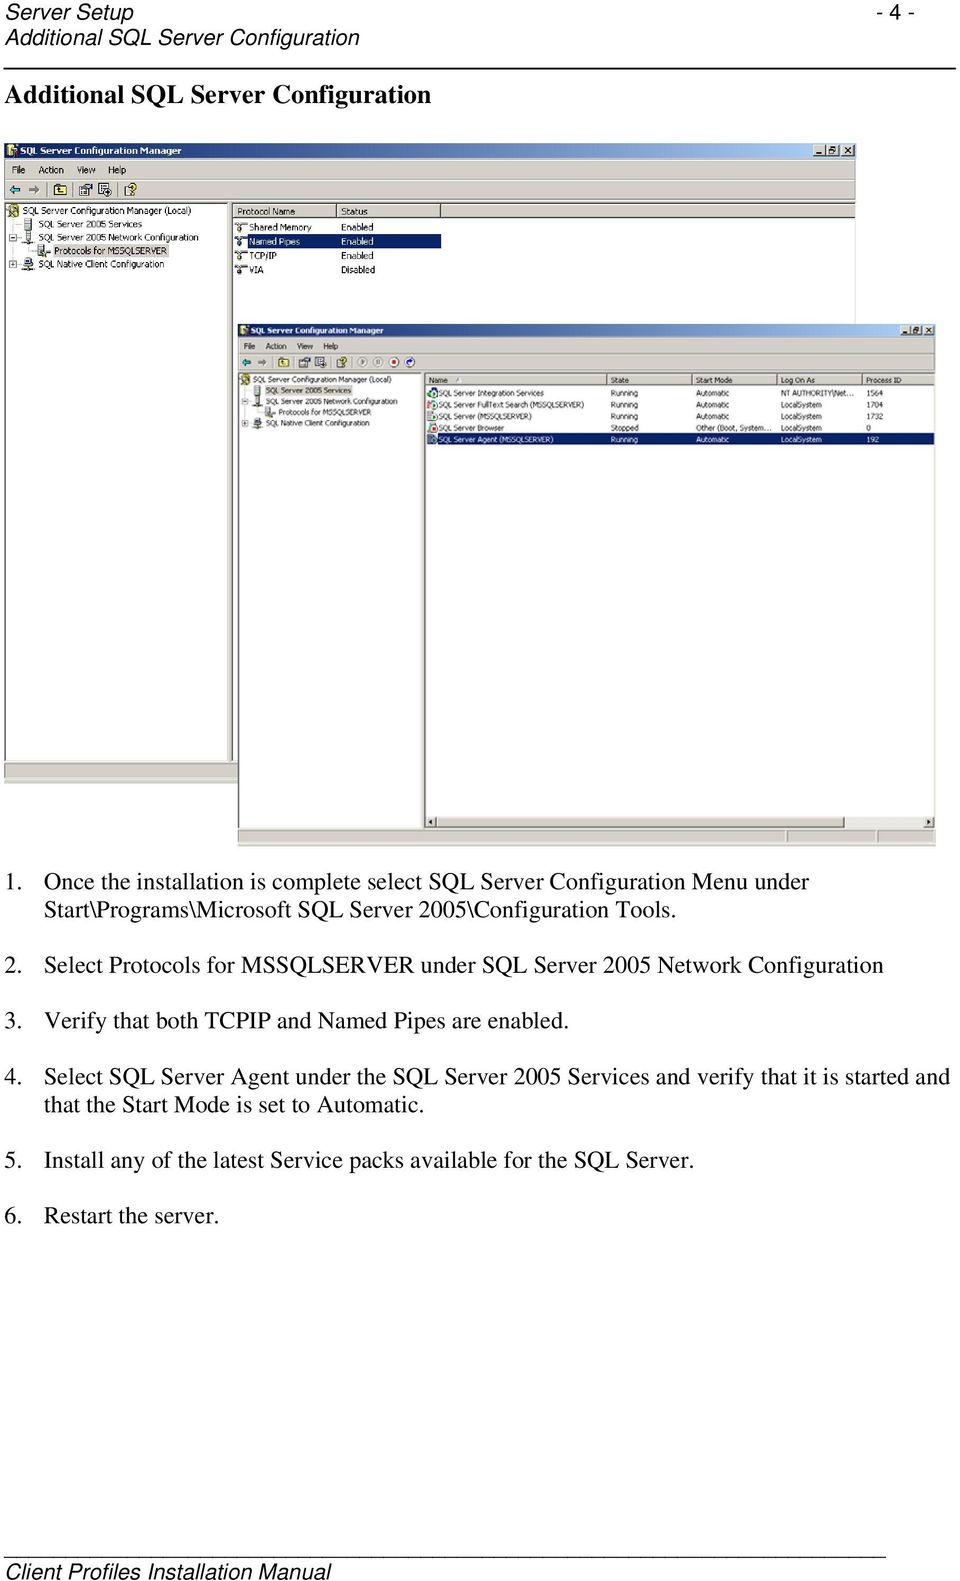 05\Configuration Tools. 2. Select Protocols for MSSQLSERVER under SQL Server 2005 Network Configuration 3.